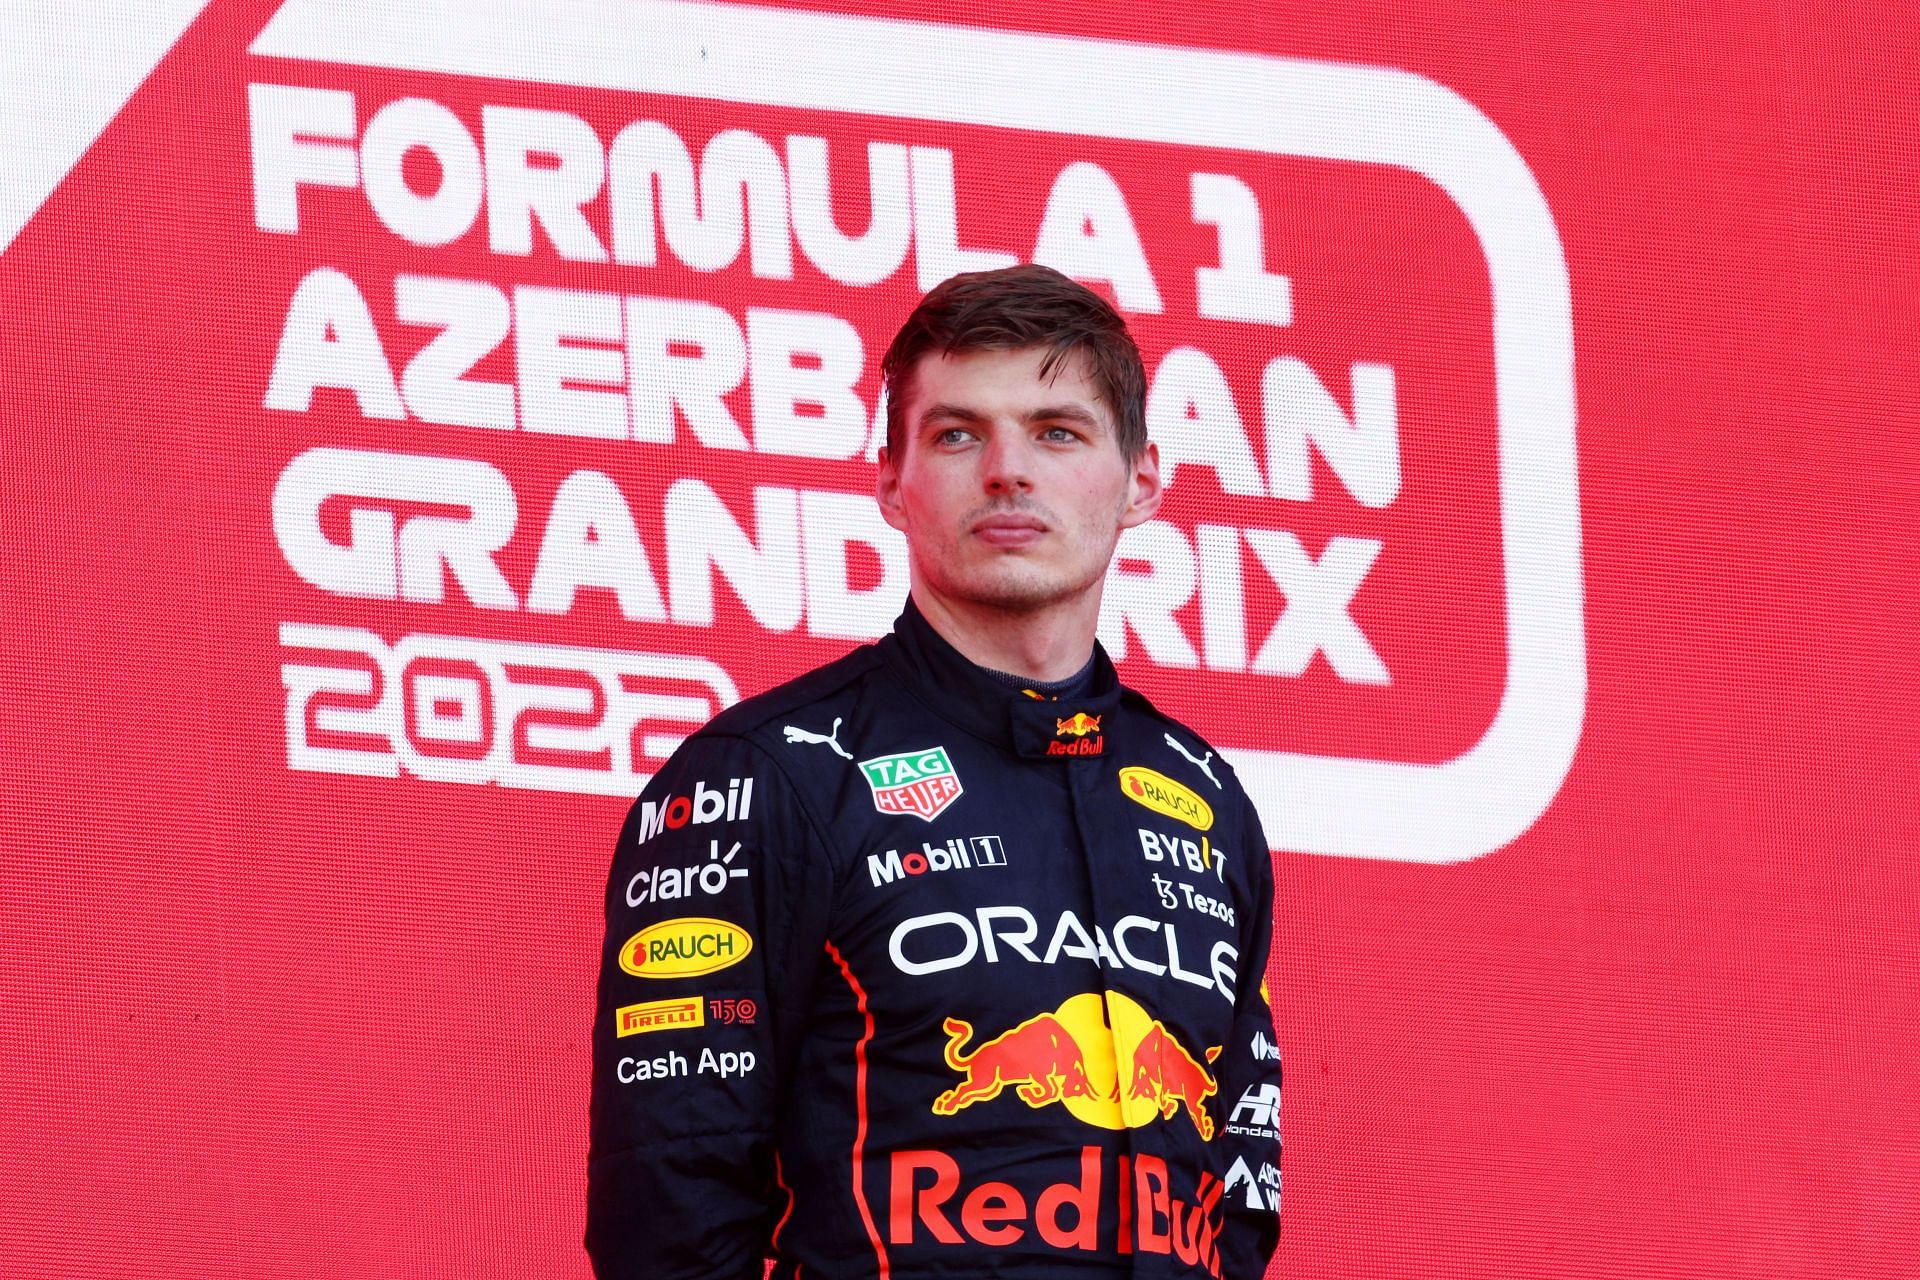 Max Verstappen at the F1 Grand Prix of Azerbaijan